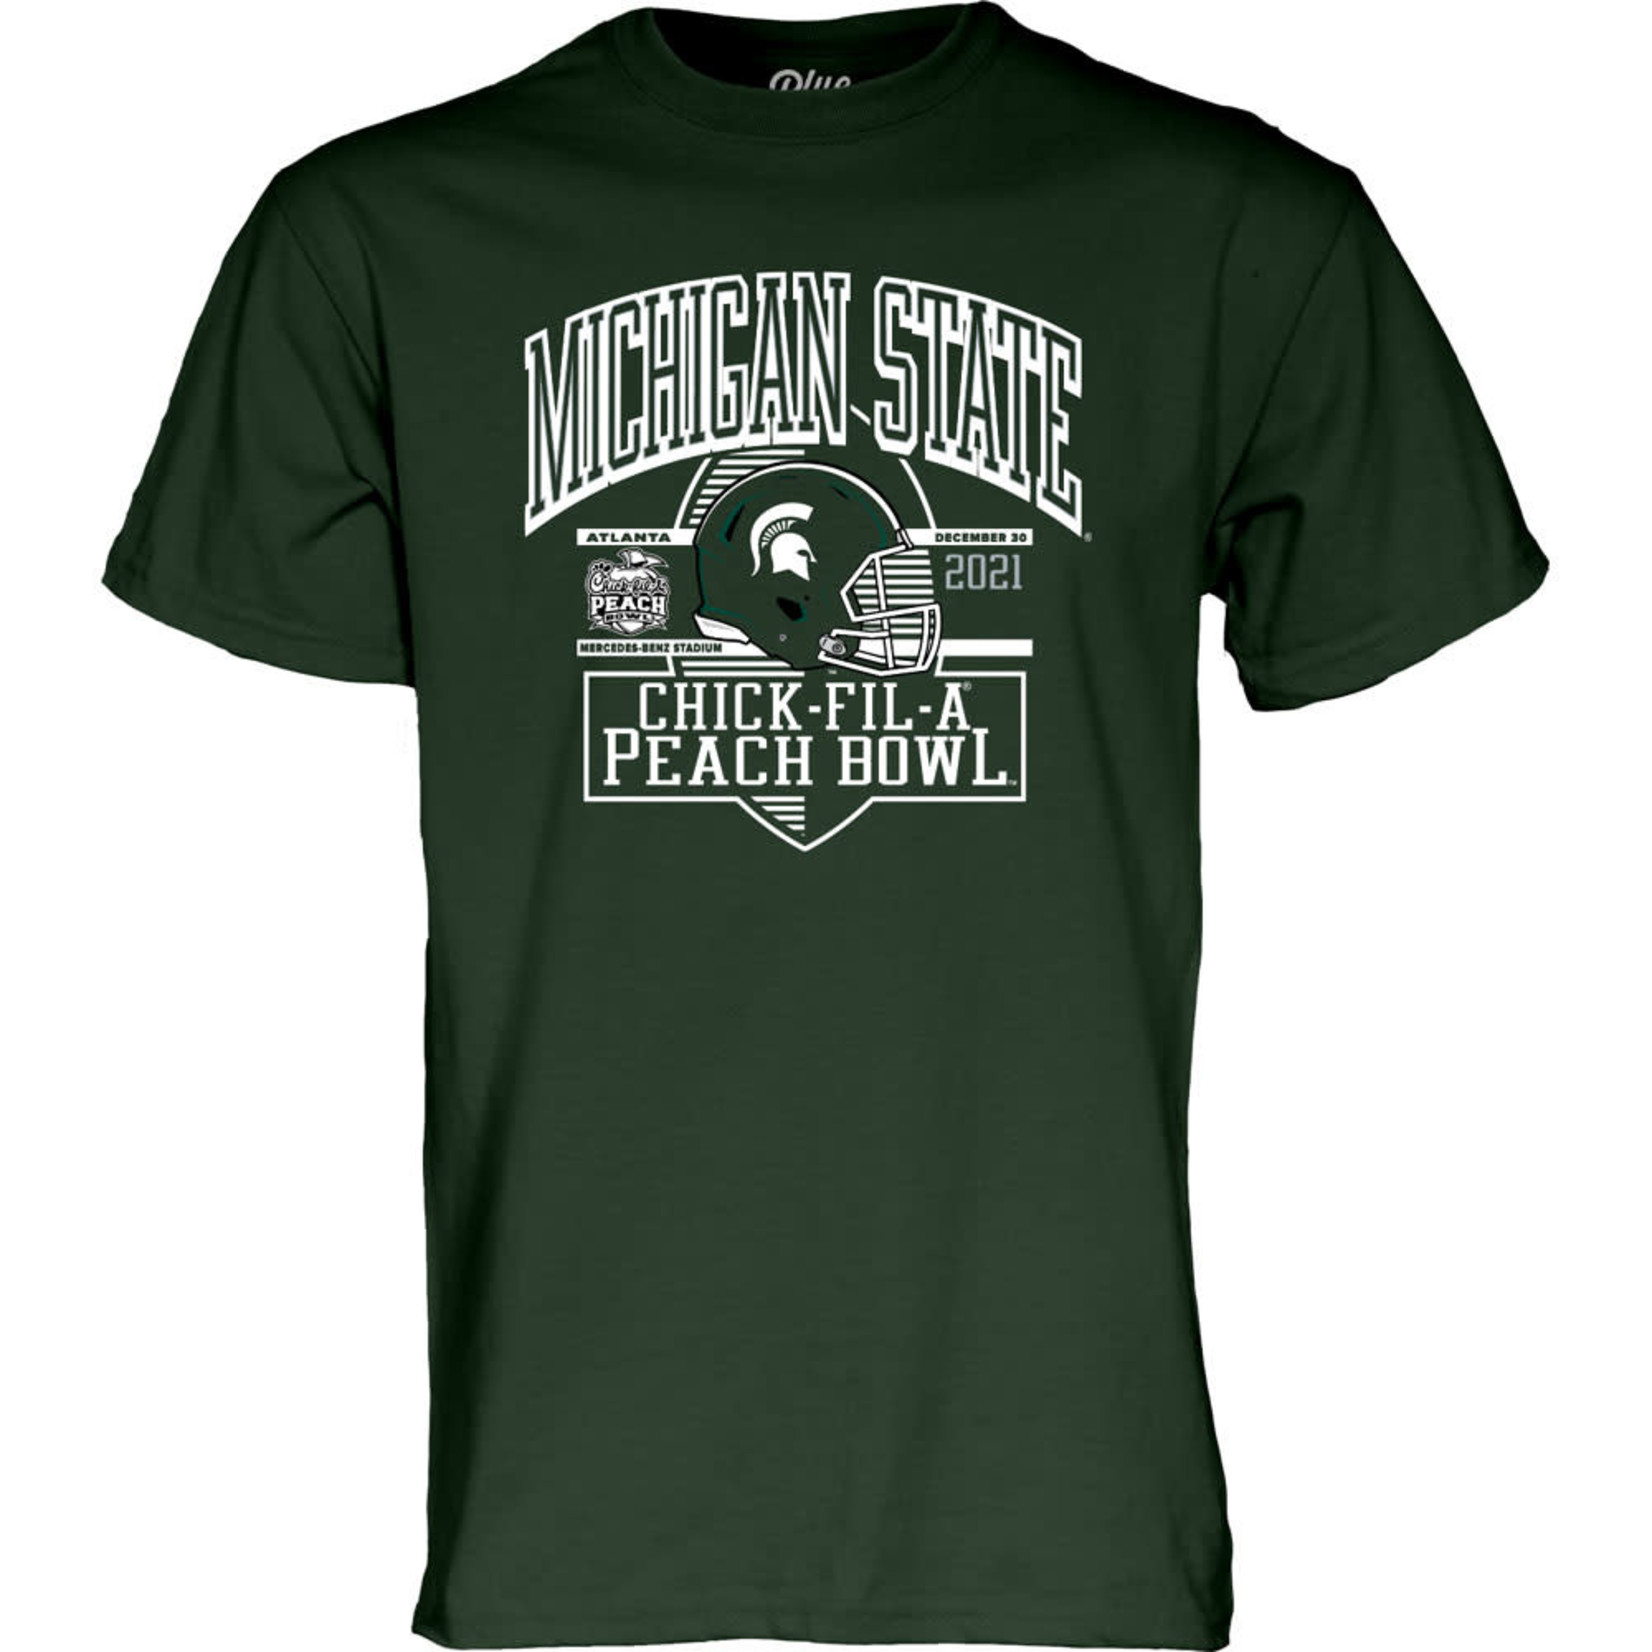 Blue 84 NCAA Michigan State University Men's Short Sleeve Peach Bowl 2021 Tee Shirt